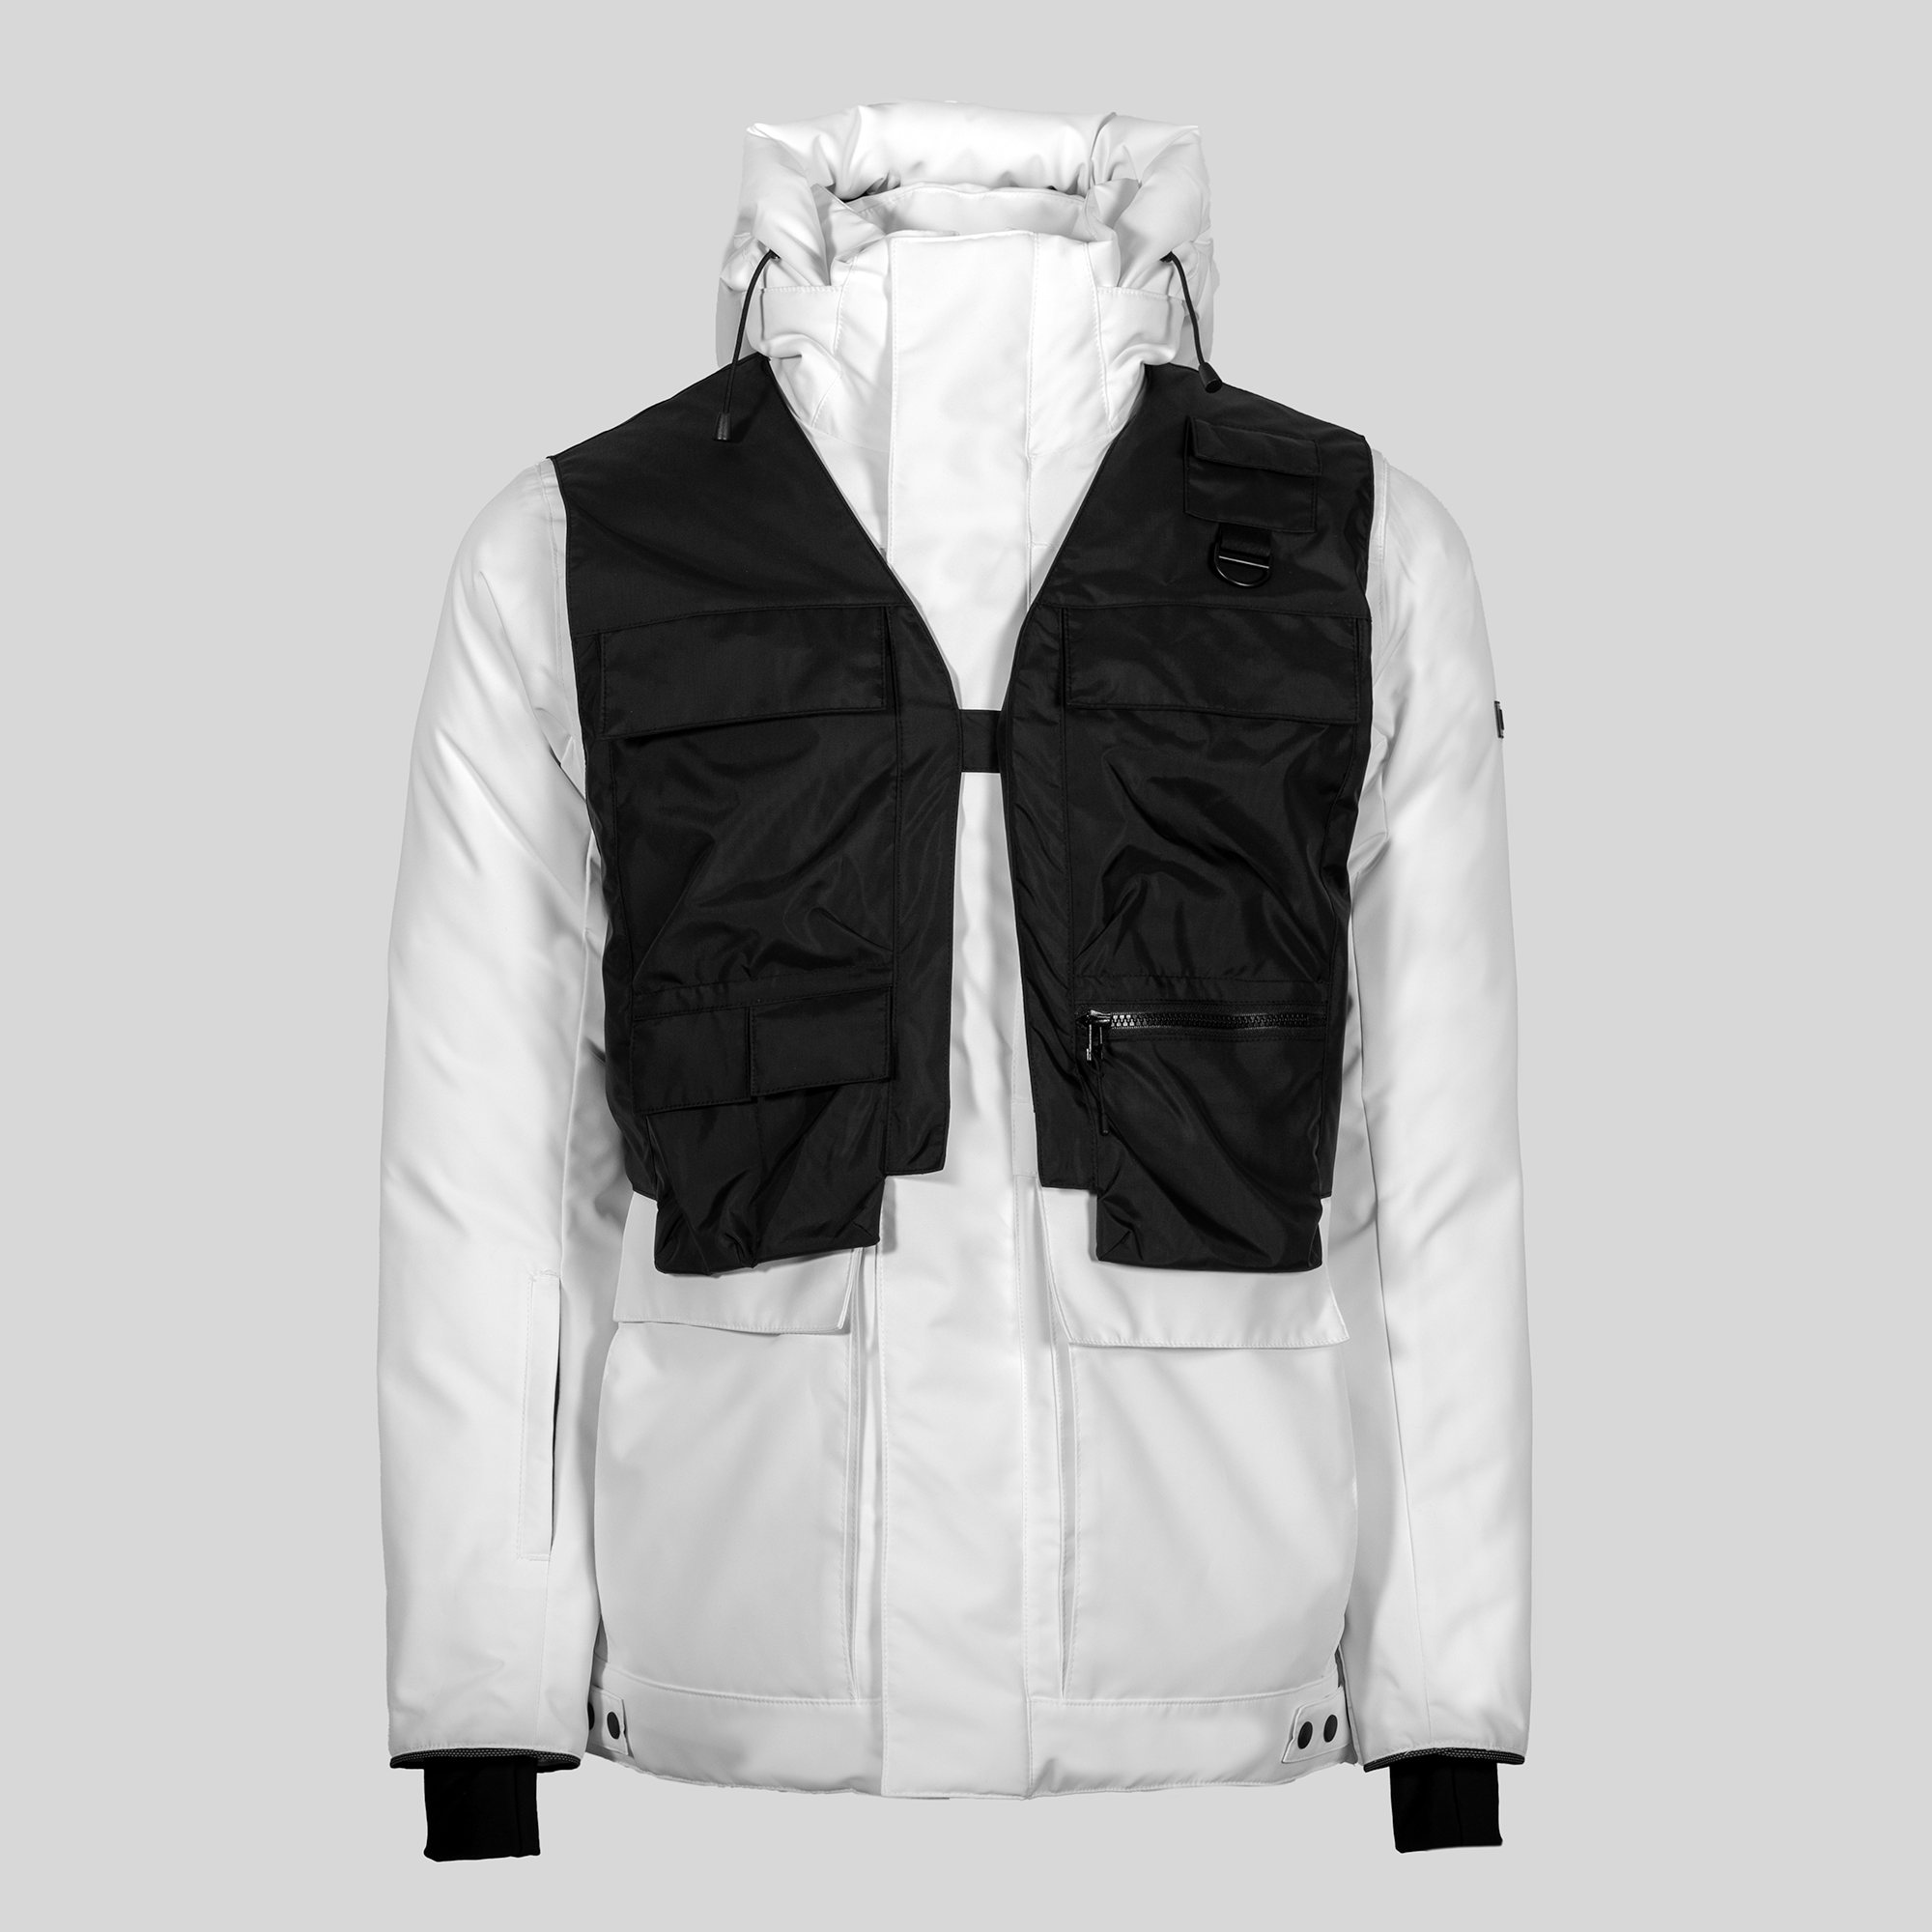 Anorak - Coats & jackets - Clothing - Man - PULL&BEAR Nicaragua